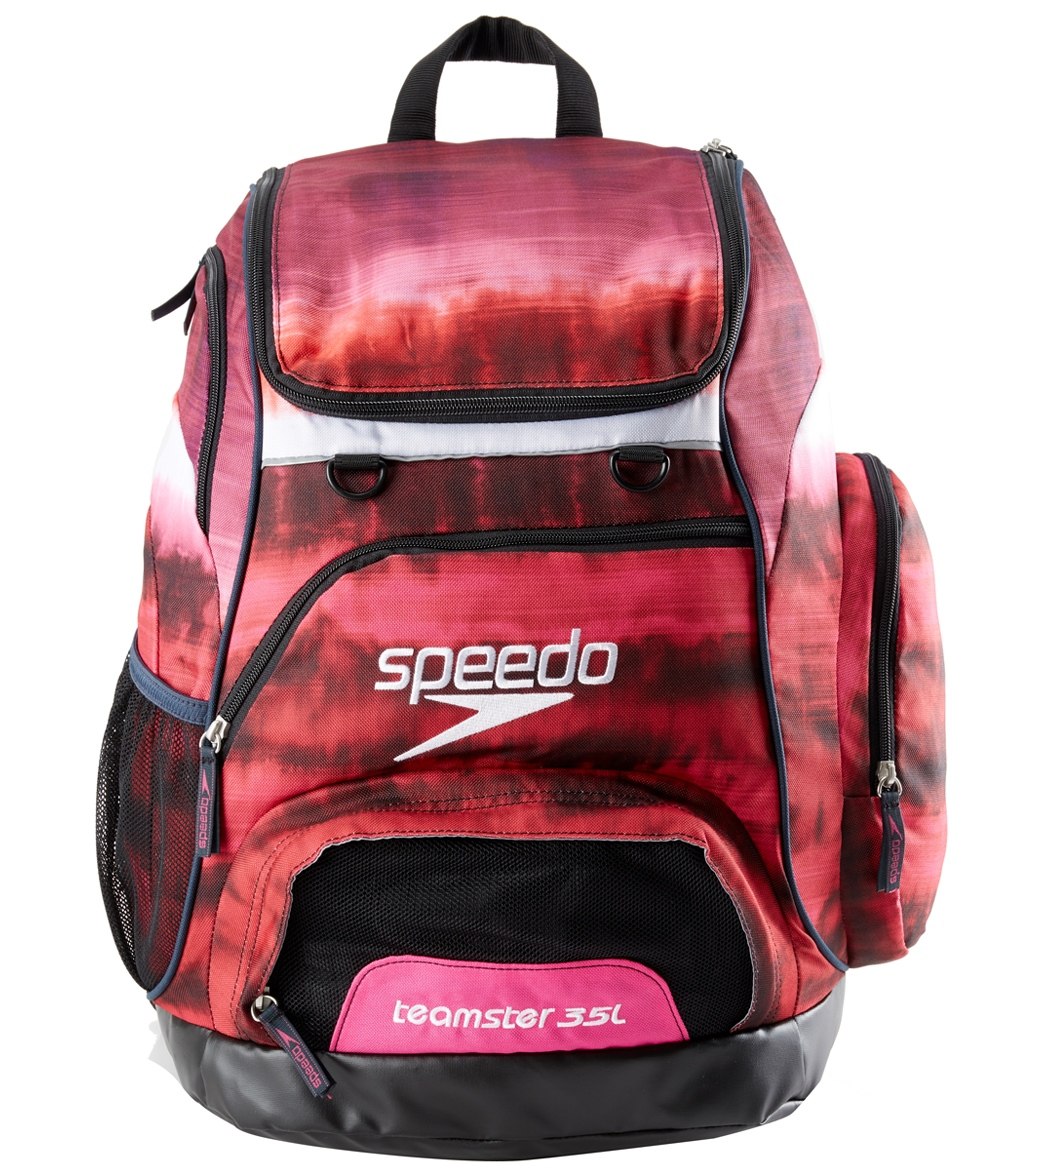 Speedo Large 35L Teamster Backpack - Tie Dye Pink - Swimoutlet.com